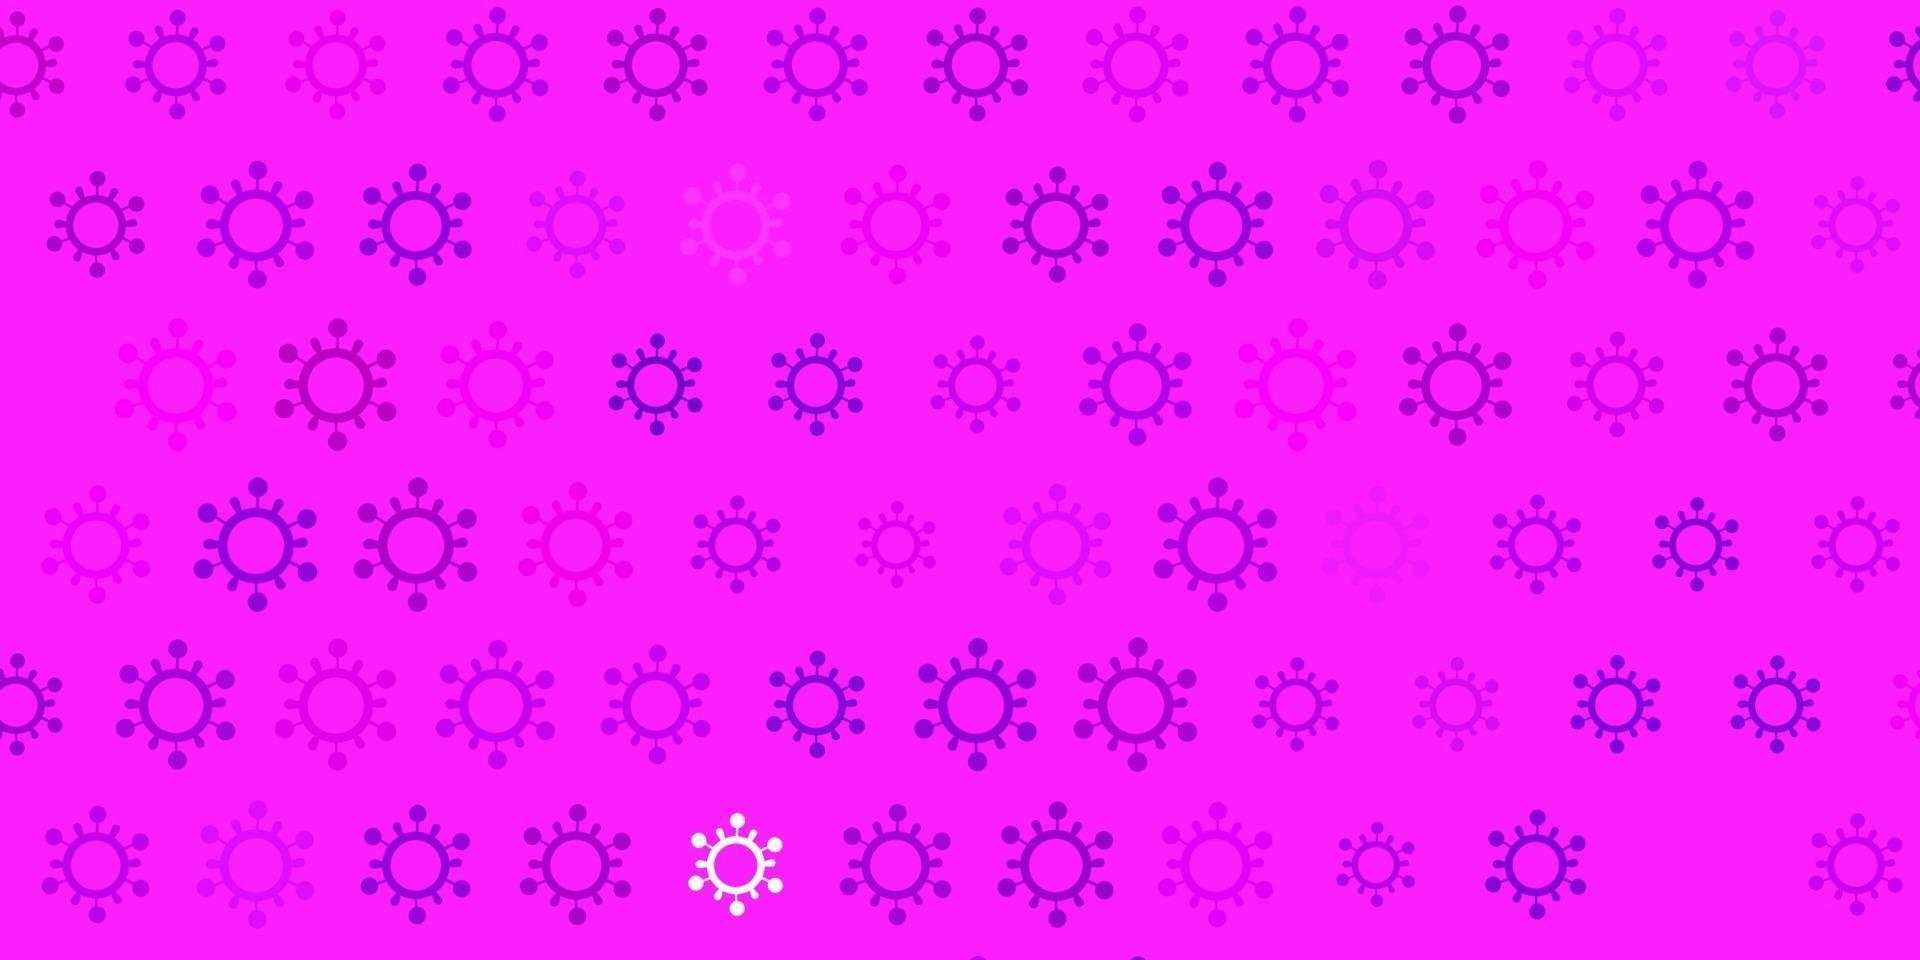 pano de fundo vector rosa claro roxo com símbolos de vírus.